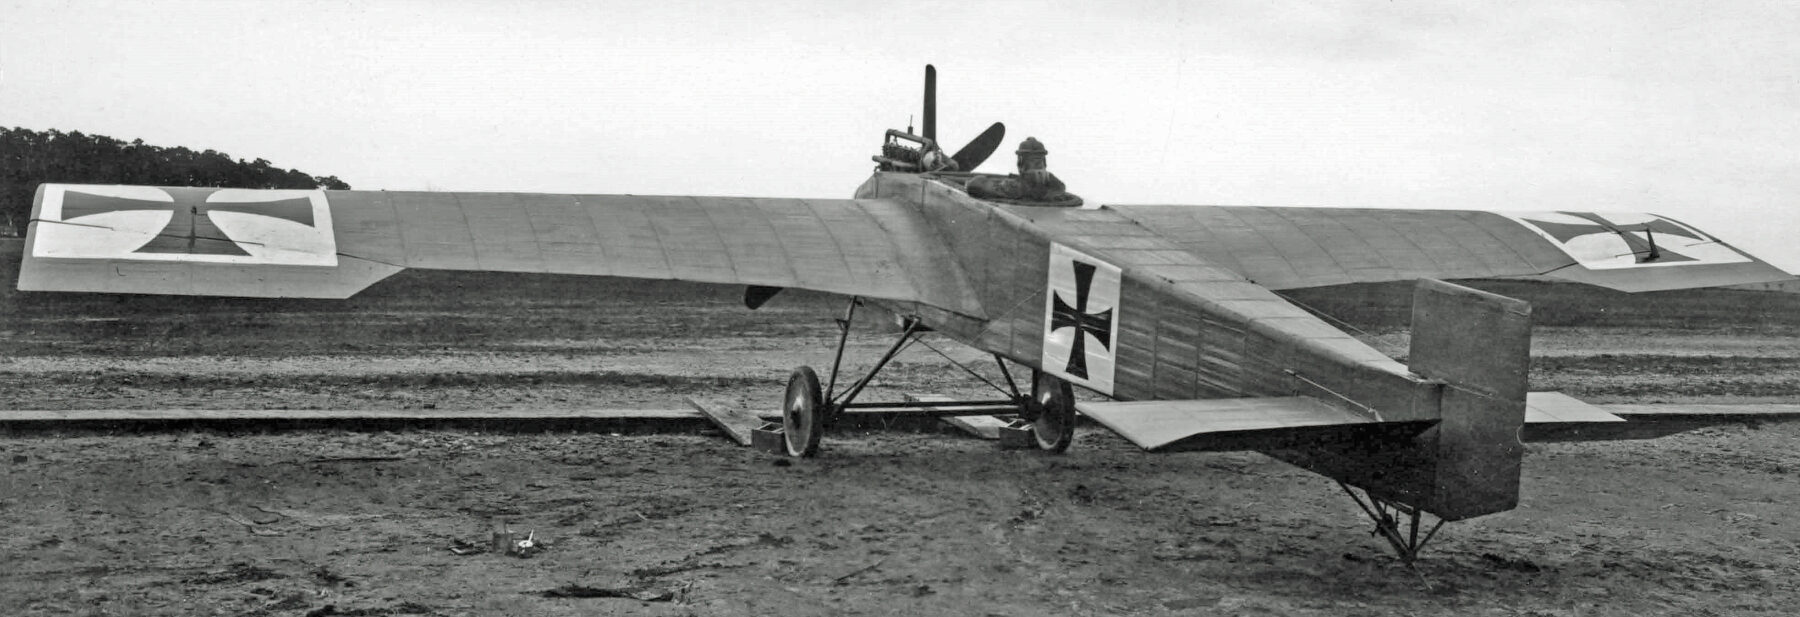 Junkers J 1 all metal "technology demonstrator" pioneer aircraft